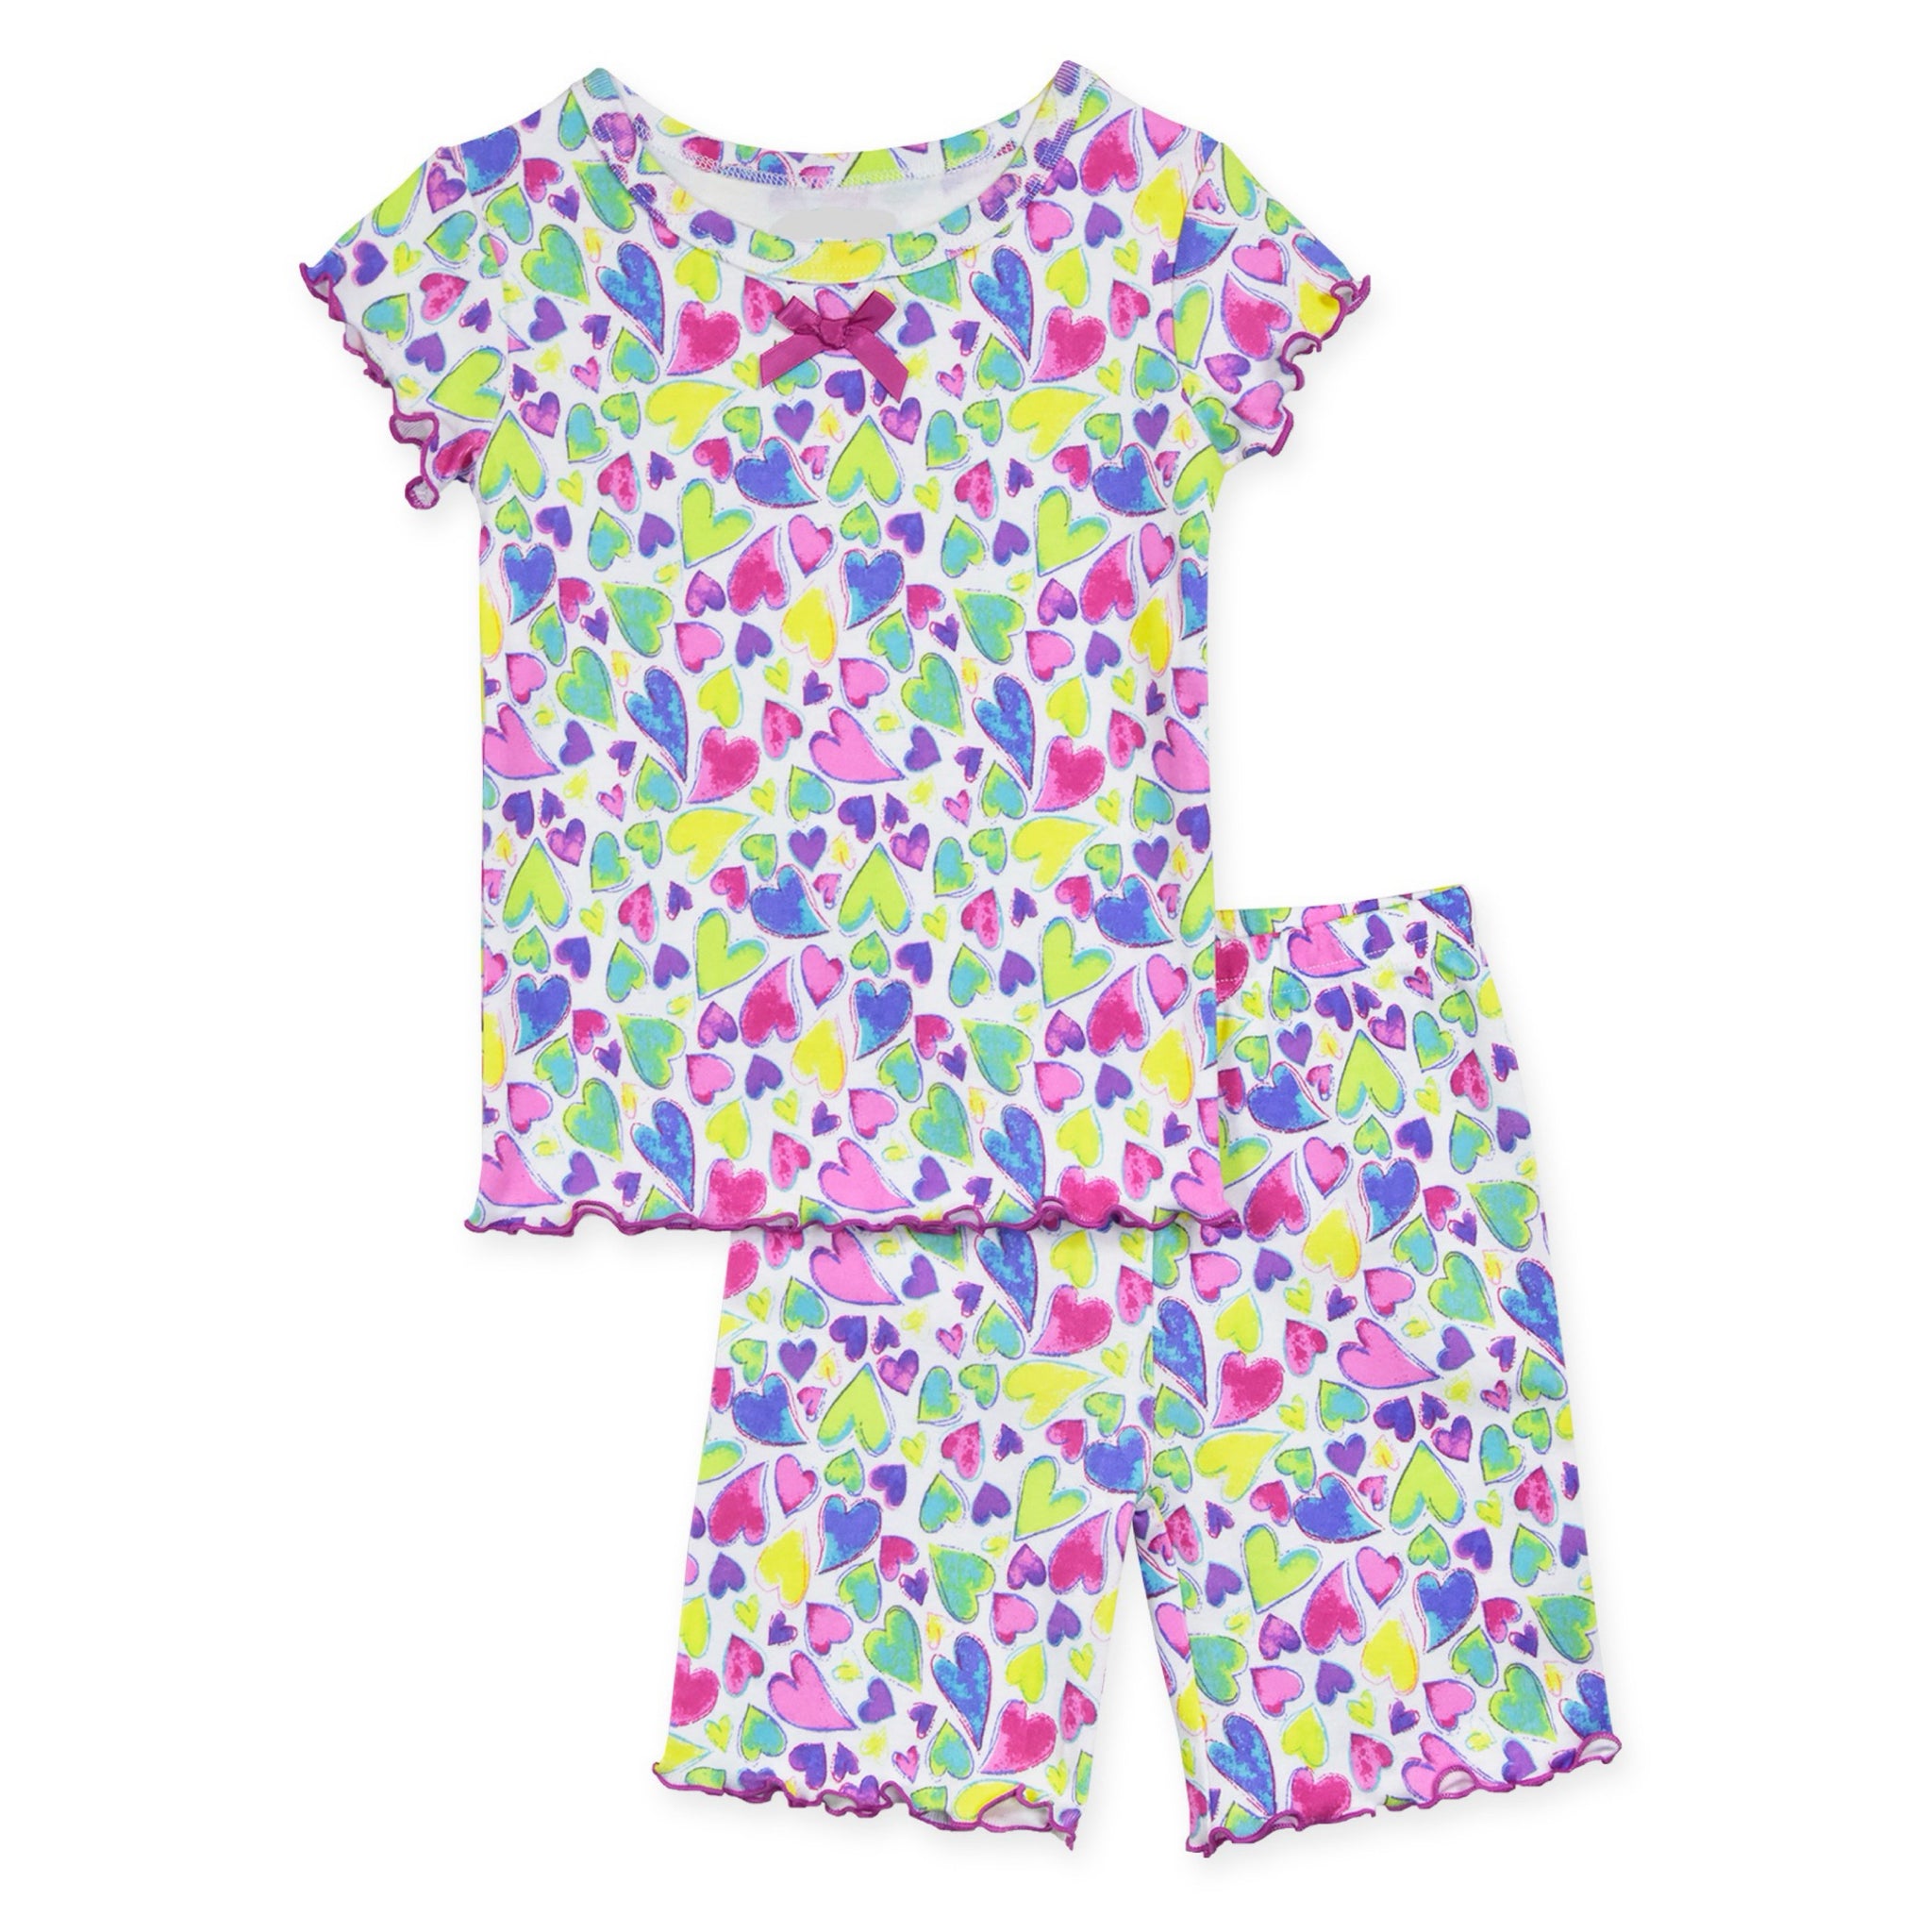 Colorful Hearts Pajamas (Nightie or Short Pj - Choose your favorite)